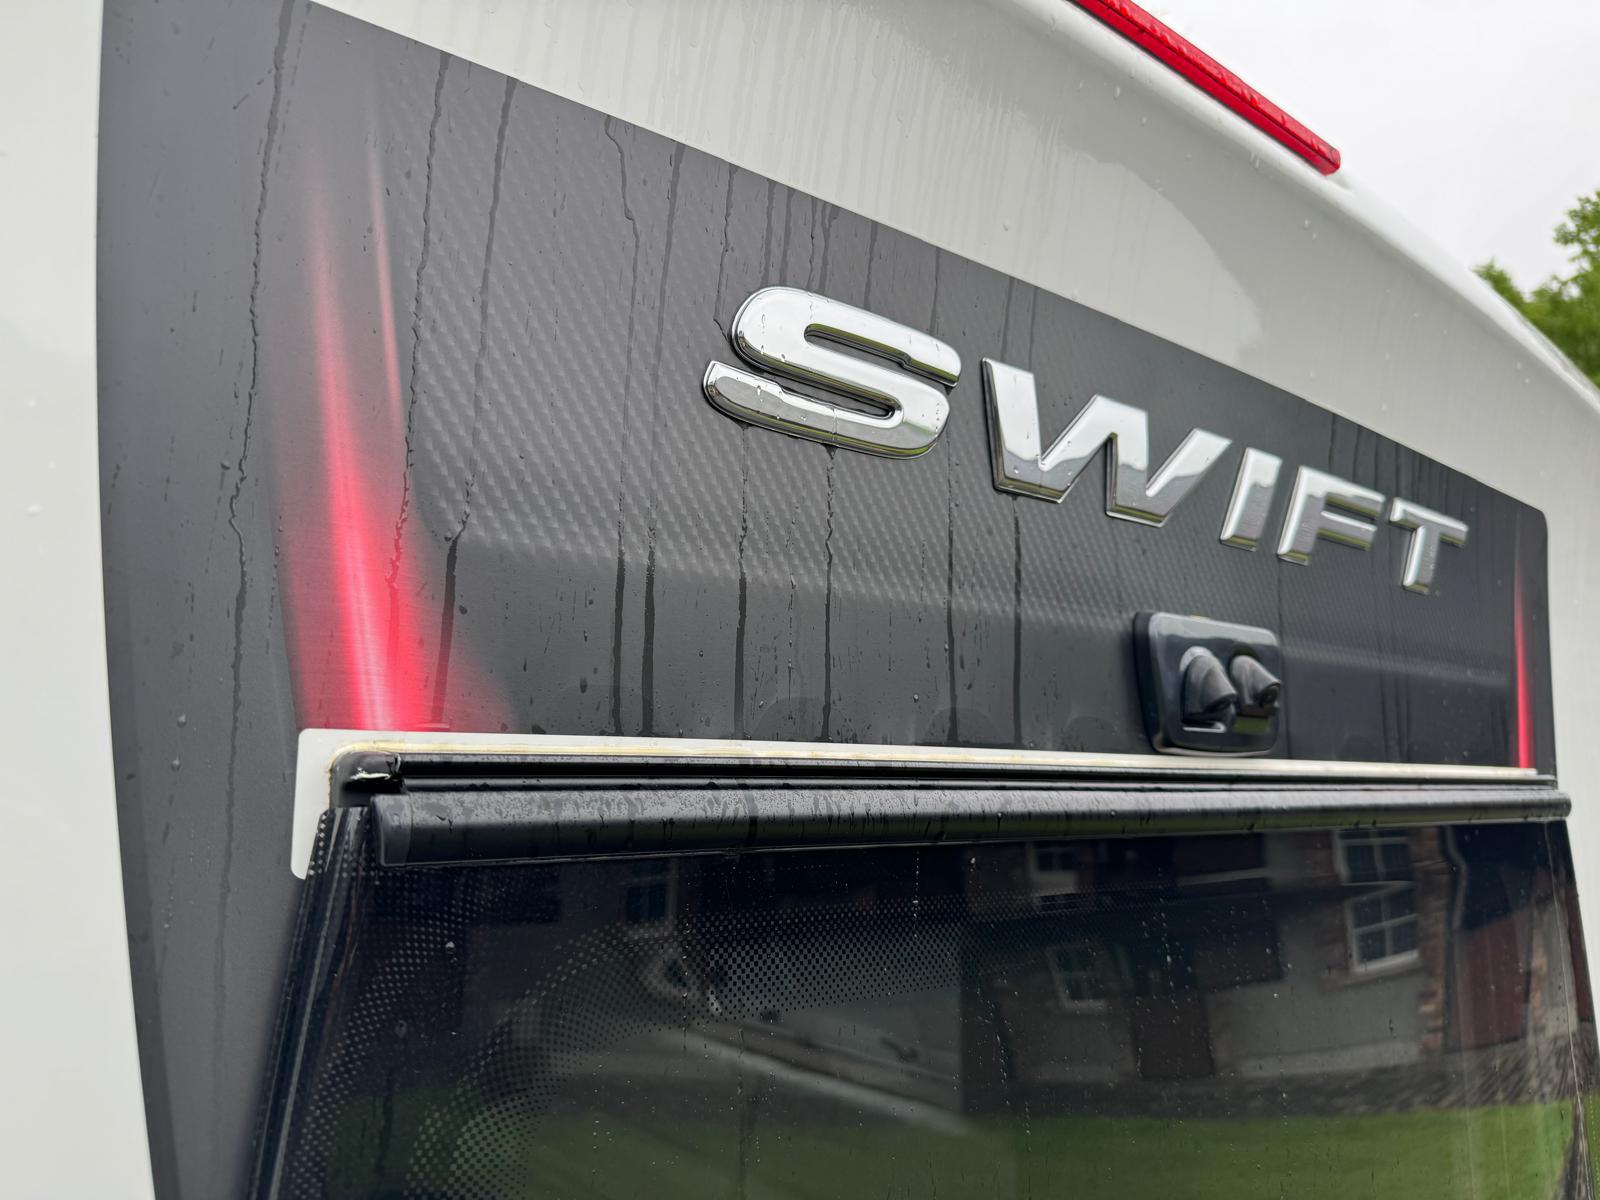 NEW Swift Kon-Tiki 874 - 180 Automatic